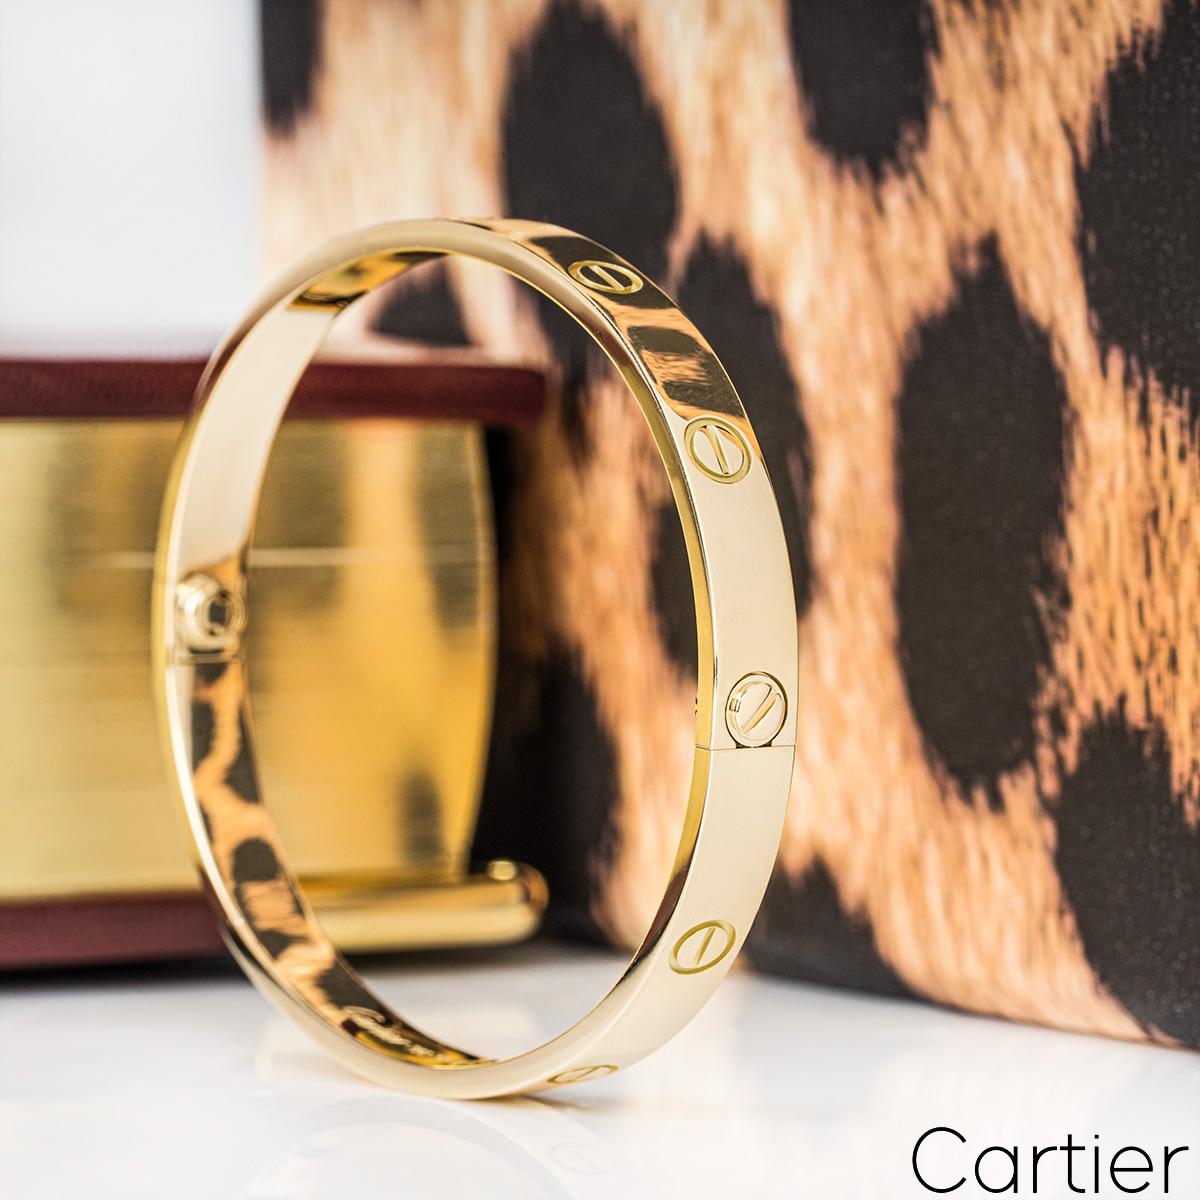 Cartier Yellow Gold Plain Love Bracelet Size 16 B6035516